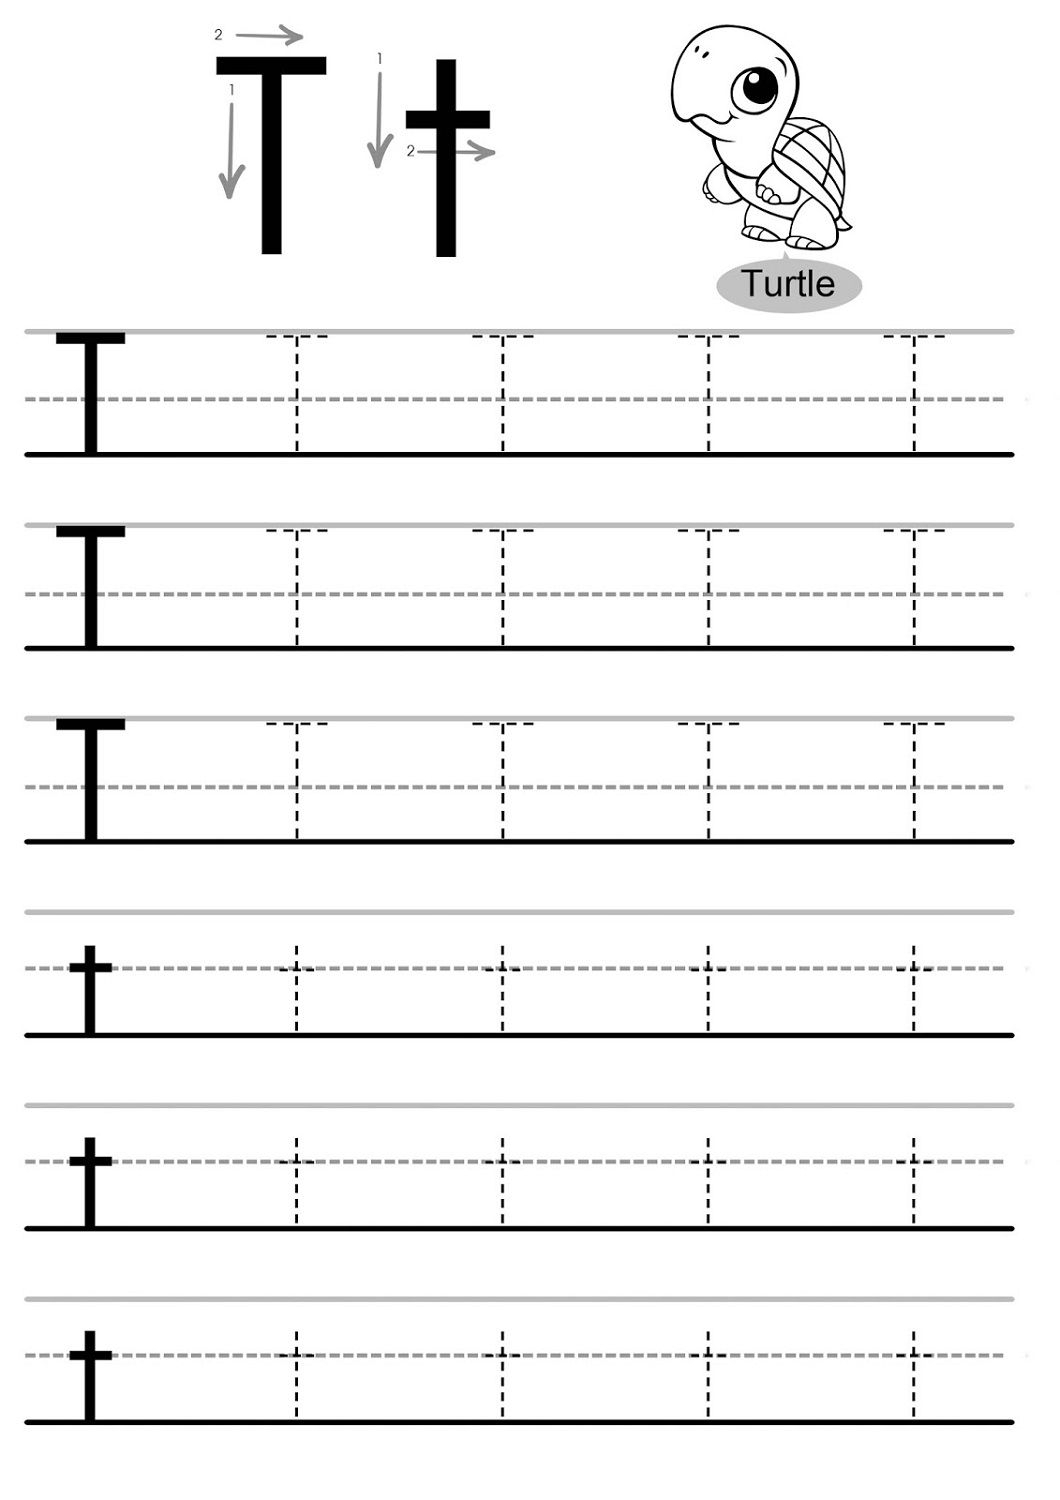 Traceable Letter Worksheets - Kids Learning Activity inside Letter T Tracing Worksheet